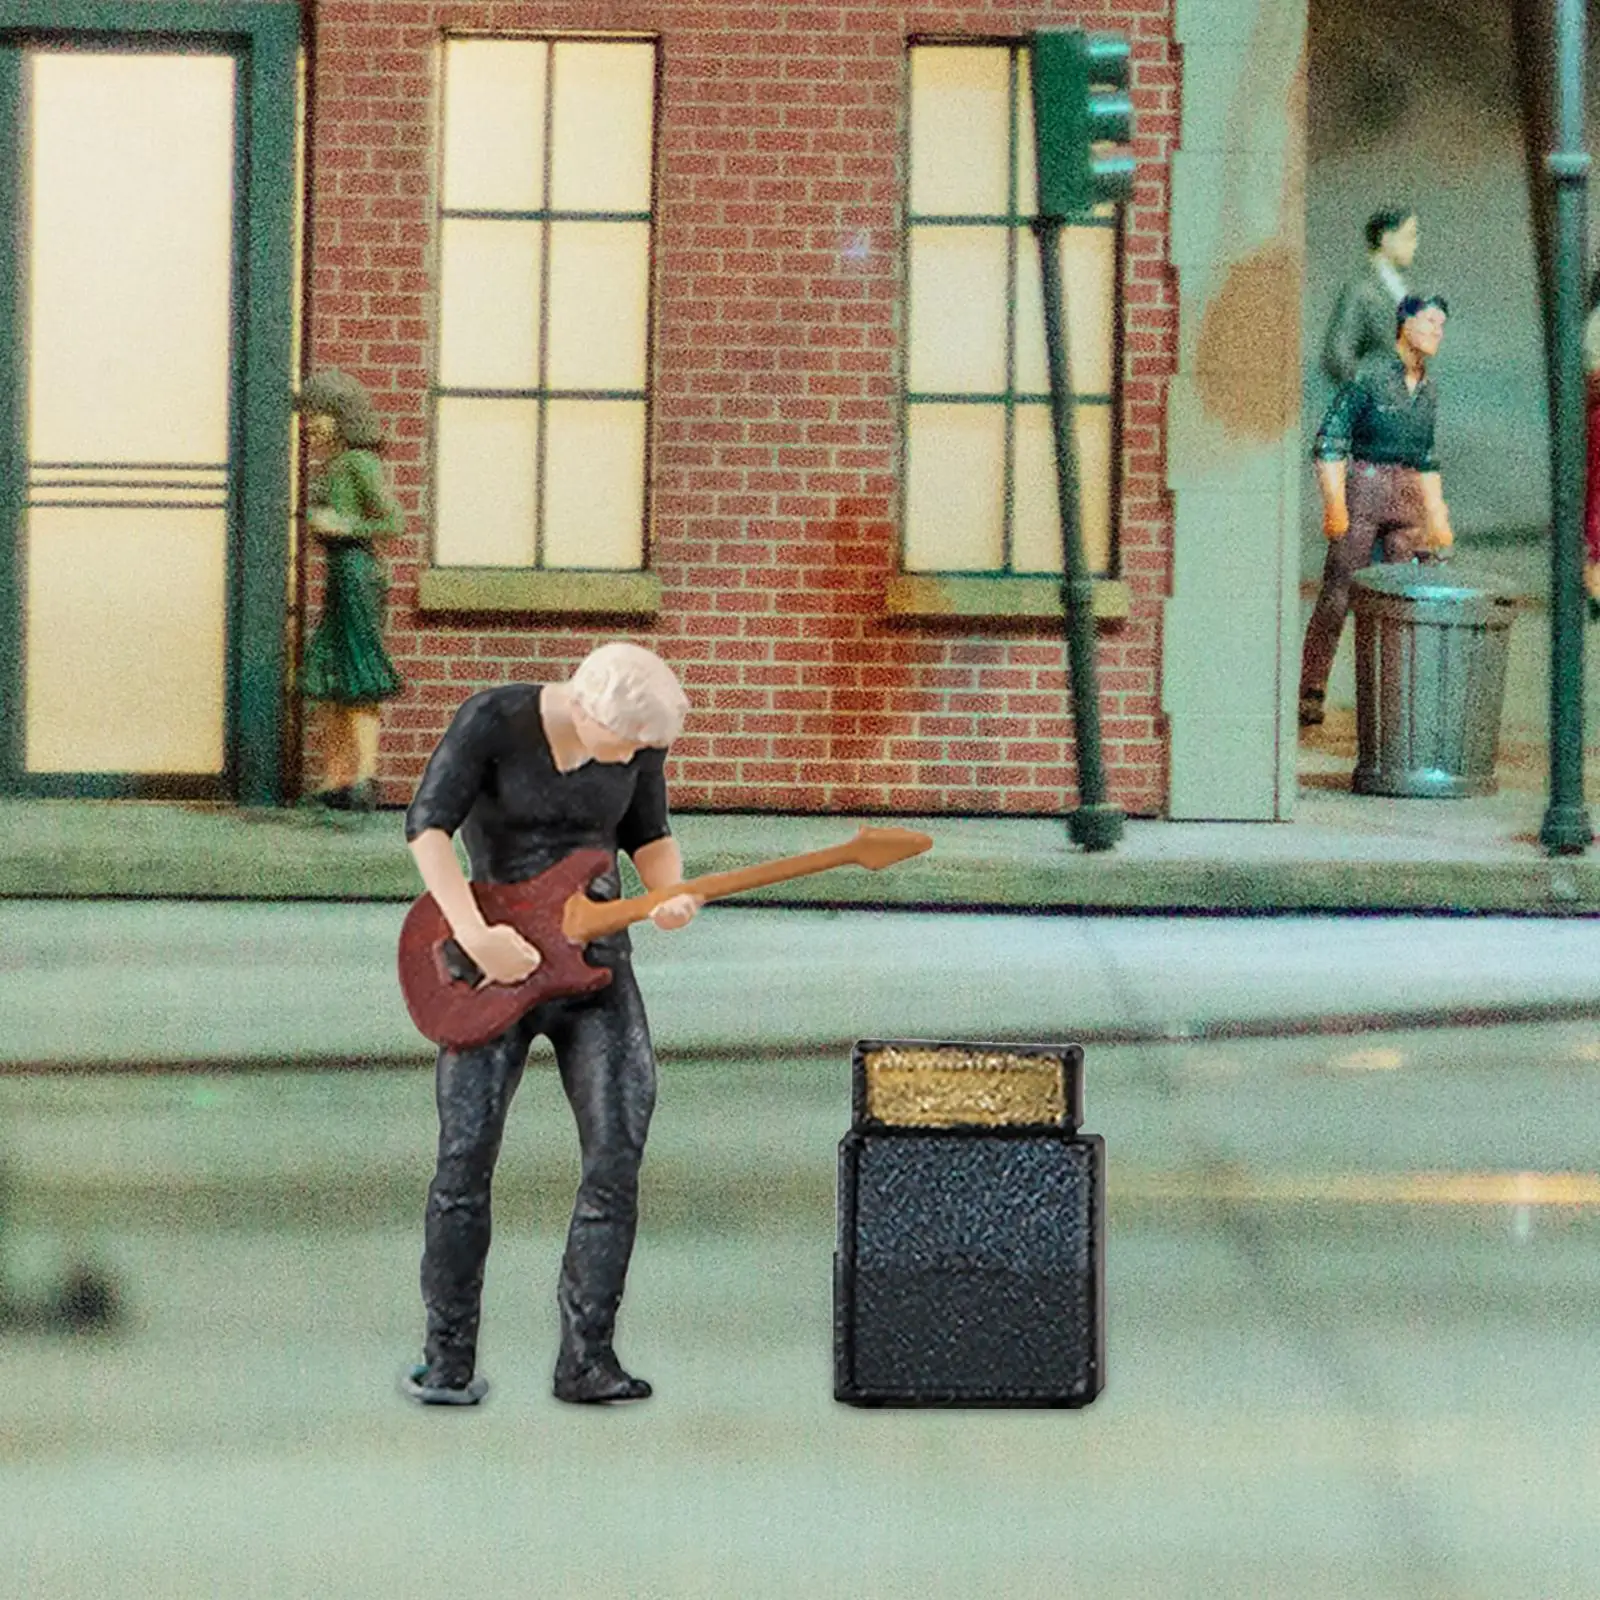 Painted Figures Stimulated Realistic Bassist People Figurine for Desktop Decoration Miniature Scene Train Layout Fairy Garden